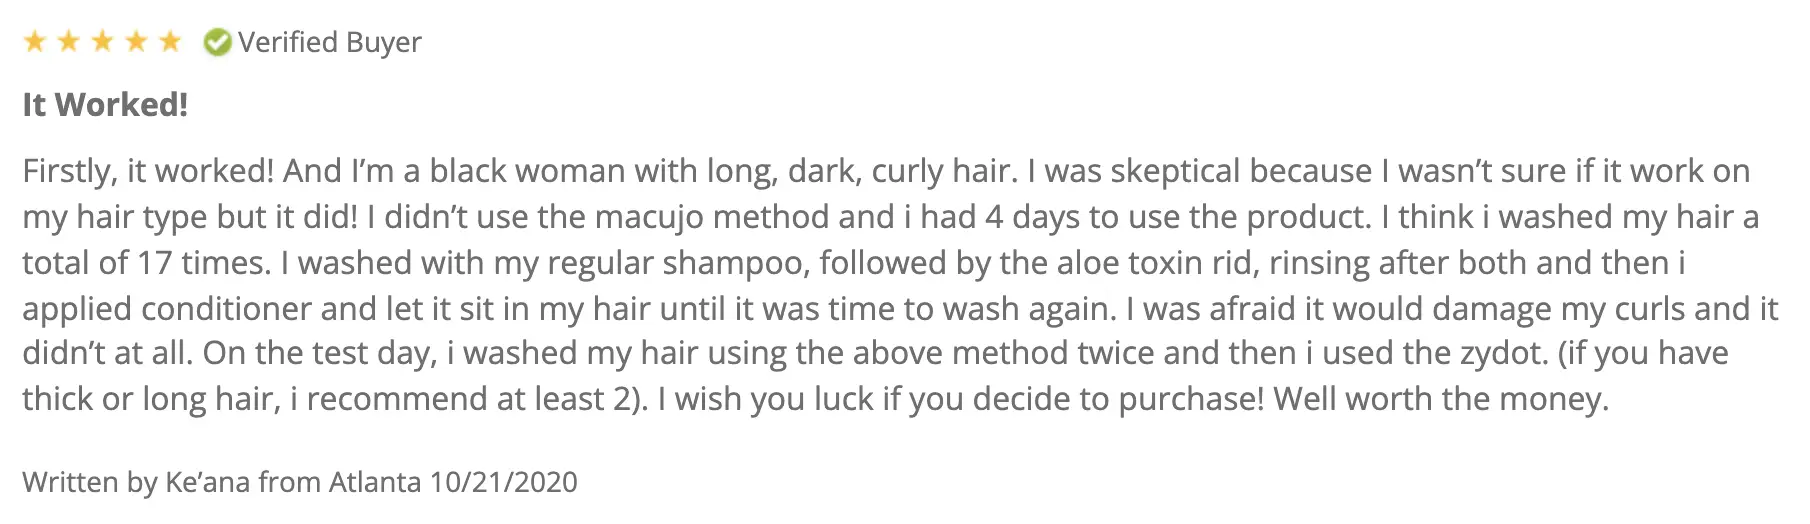 Old Style Aloe Toxin Rid Shampoo Review - Customer Testimonial 